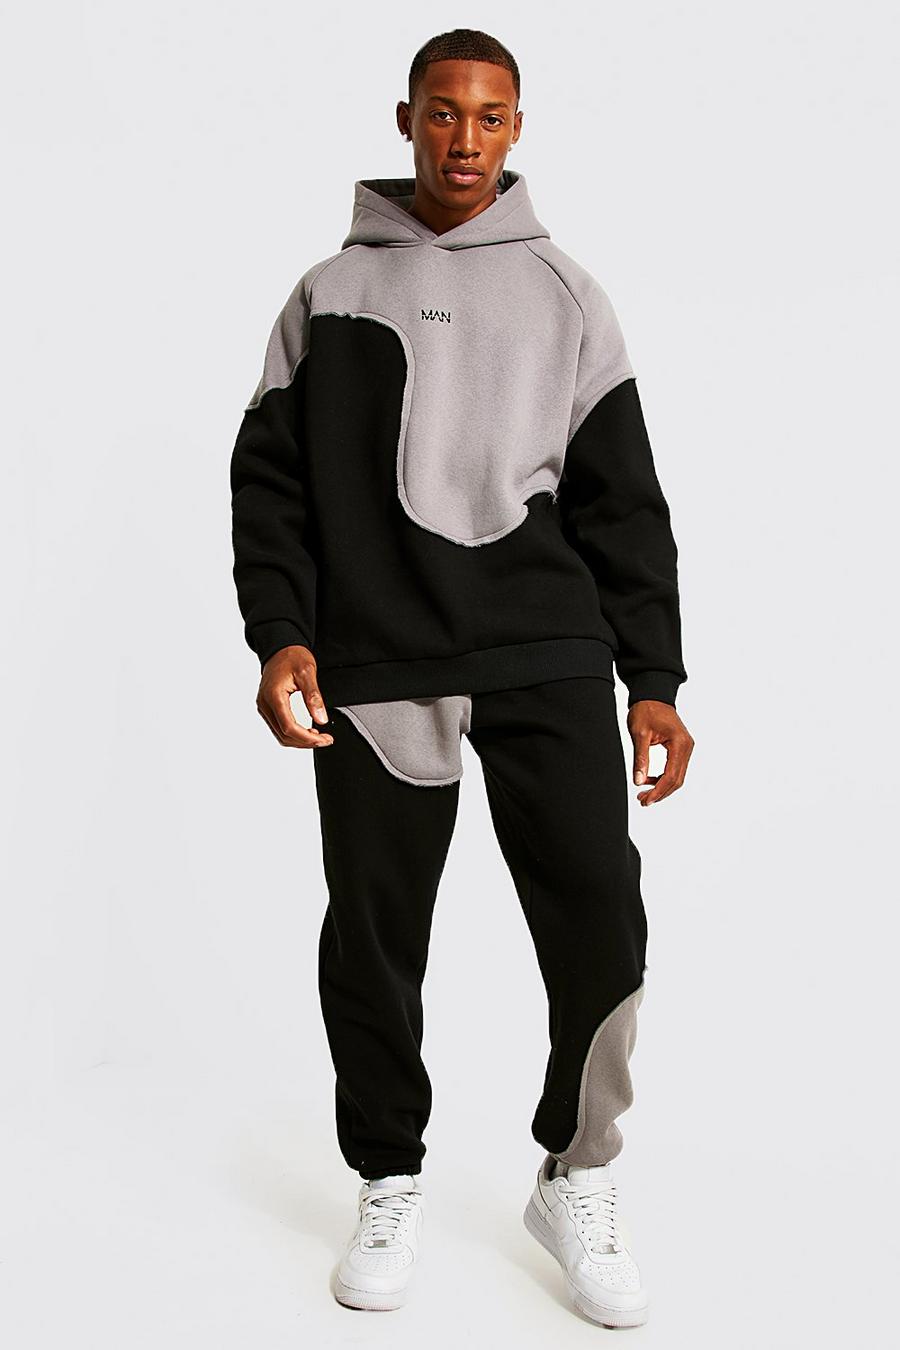 Gespleißter Oversize Man Trainingsanzug mit Kapuze, Charcoal grey image number 1